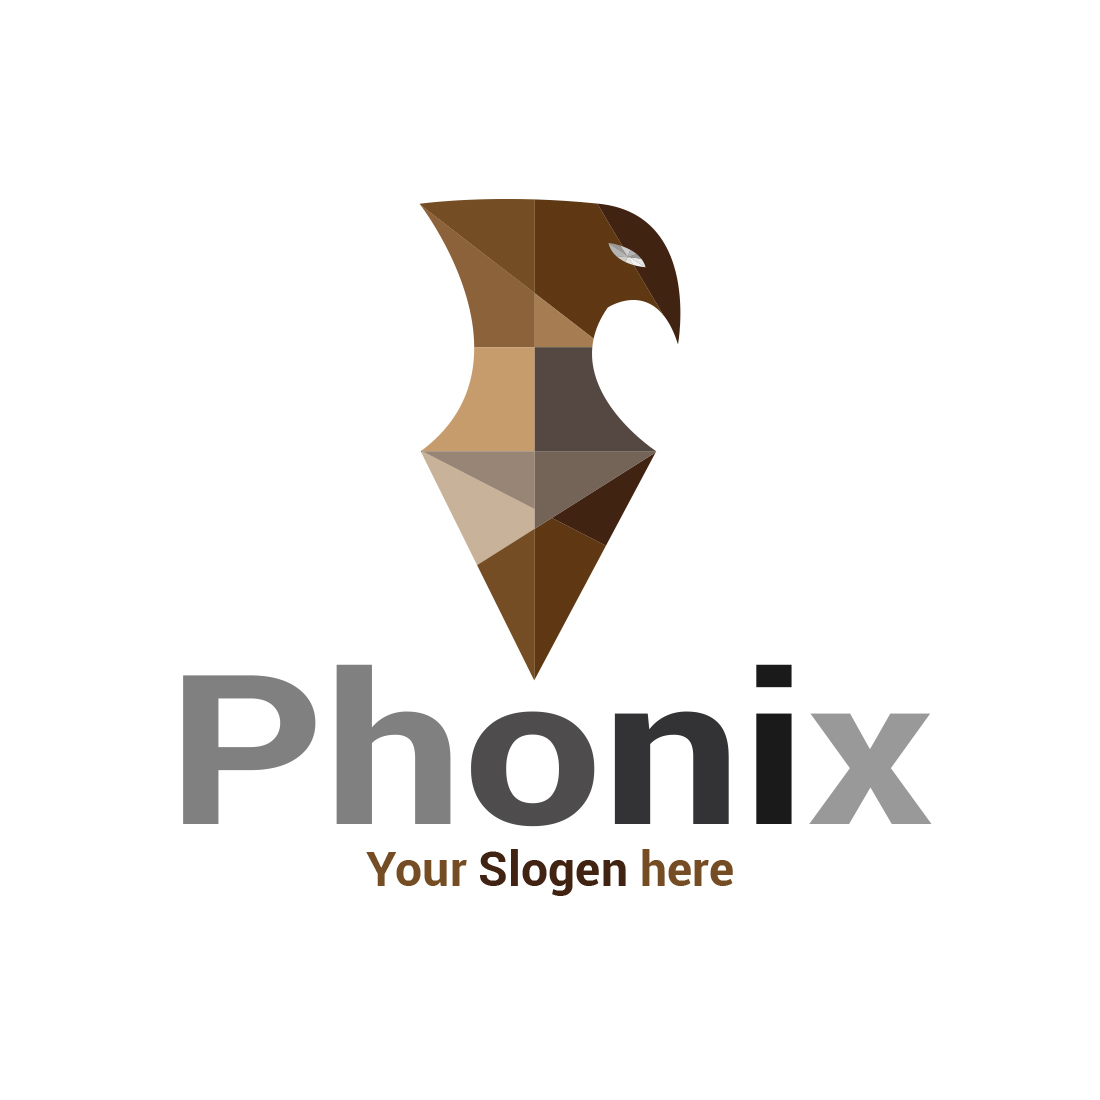 Phonix geometric logo design preview image.